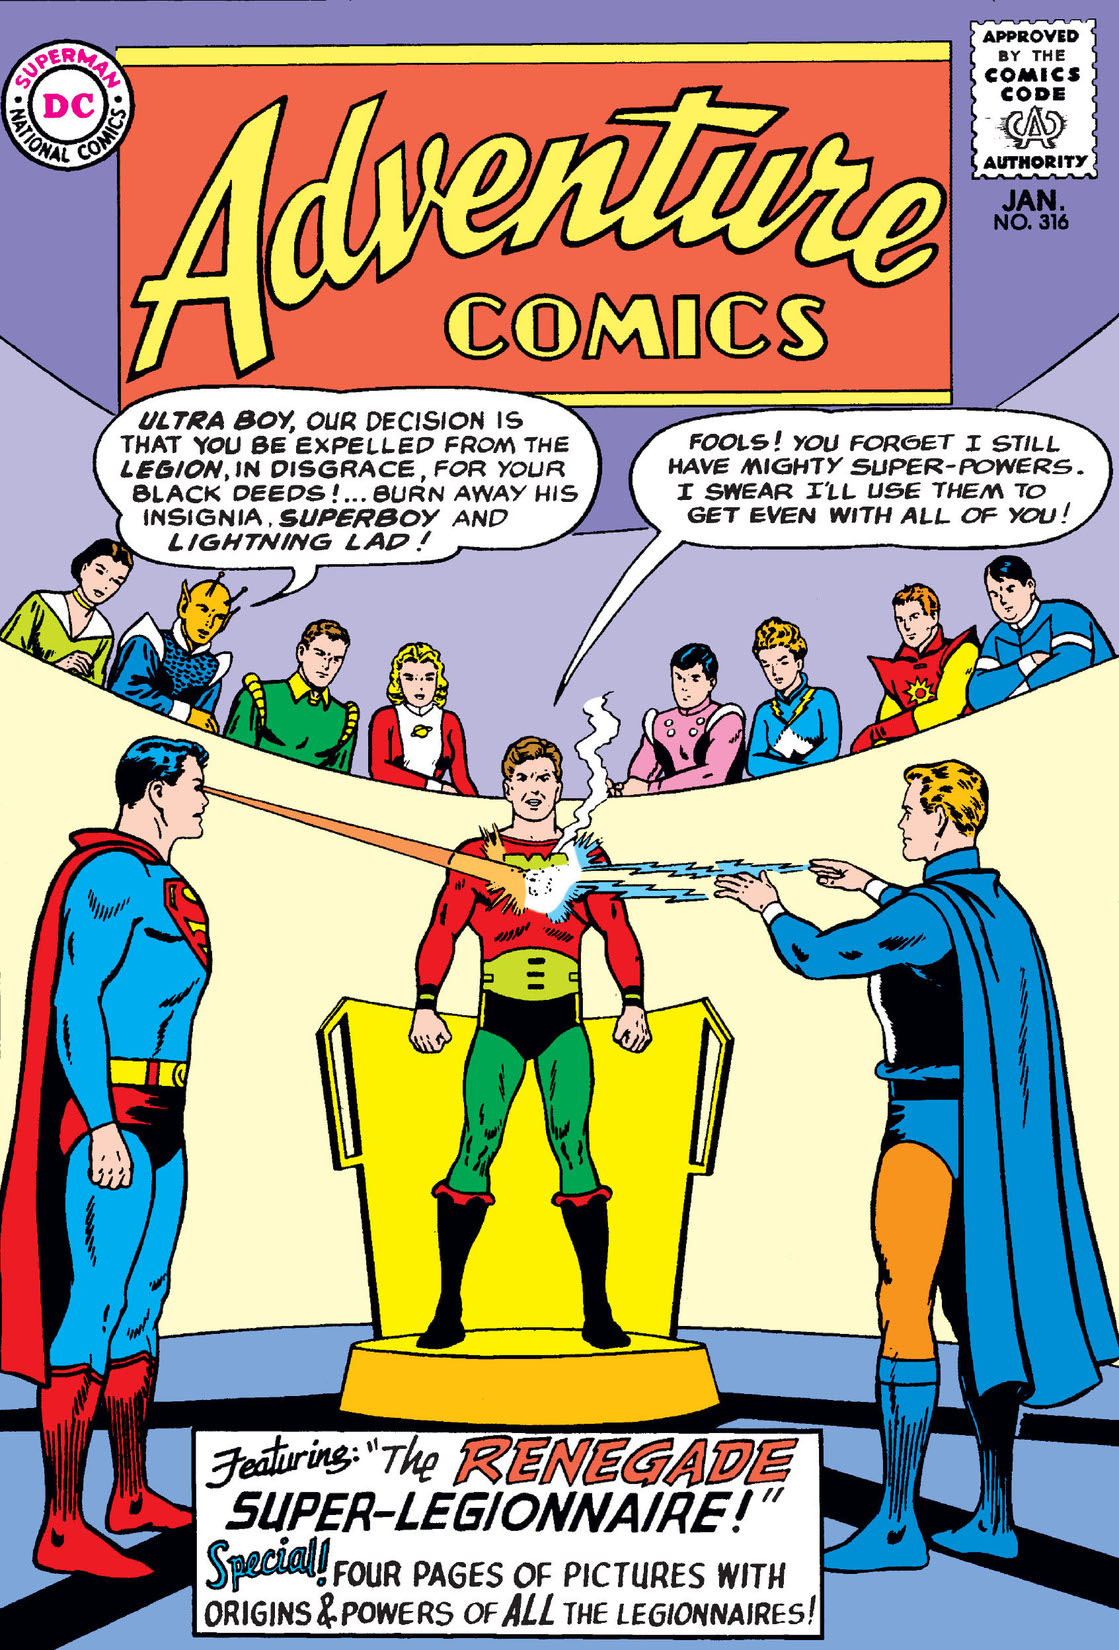 Adventure Comics (1938-) #316 preview images